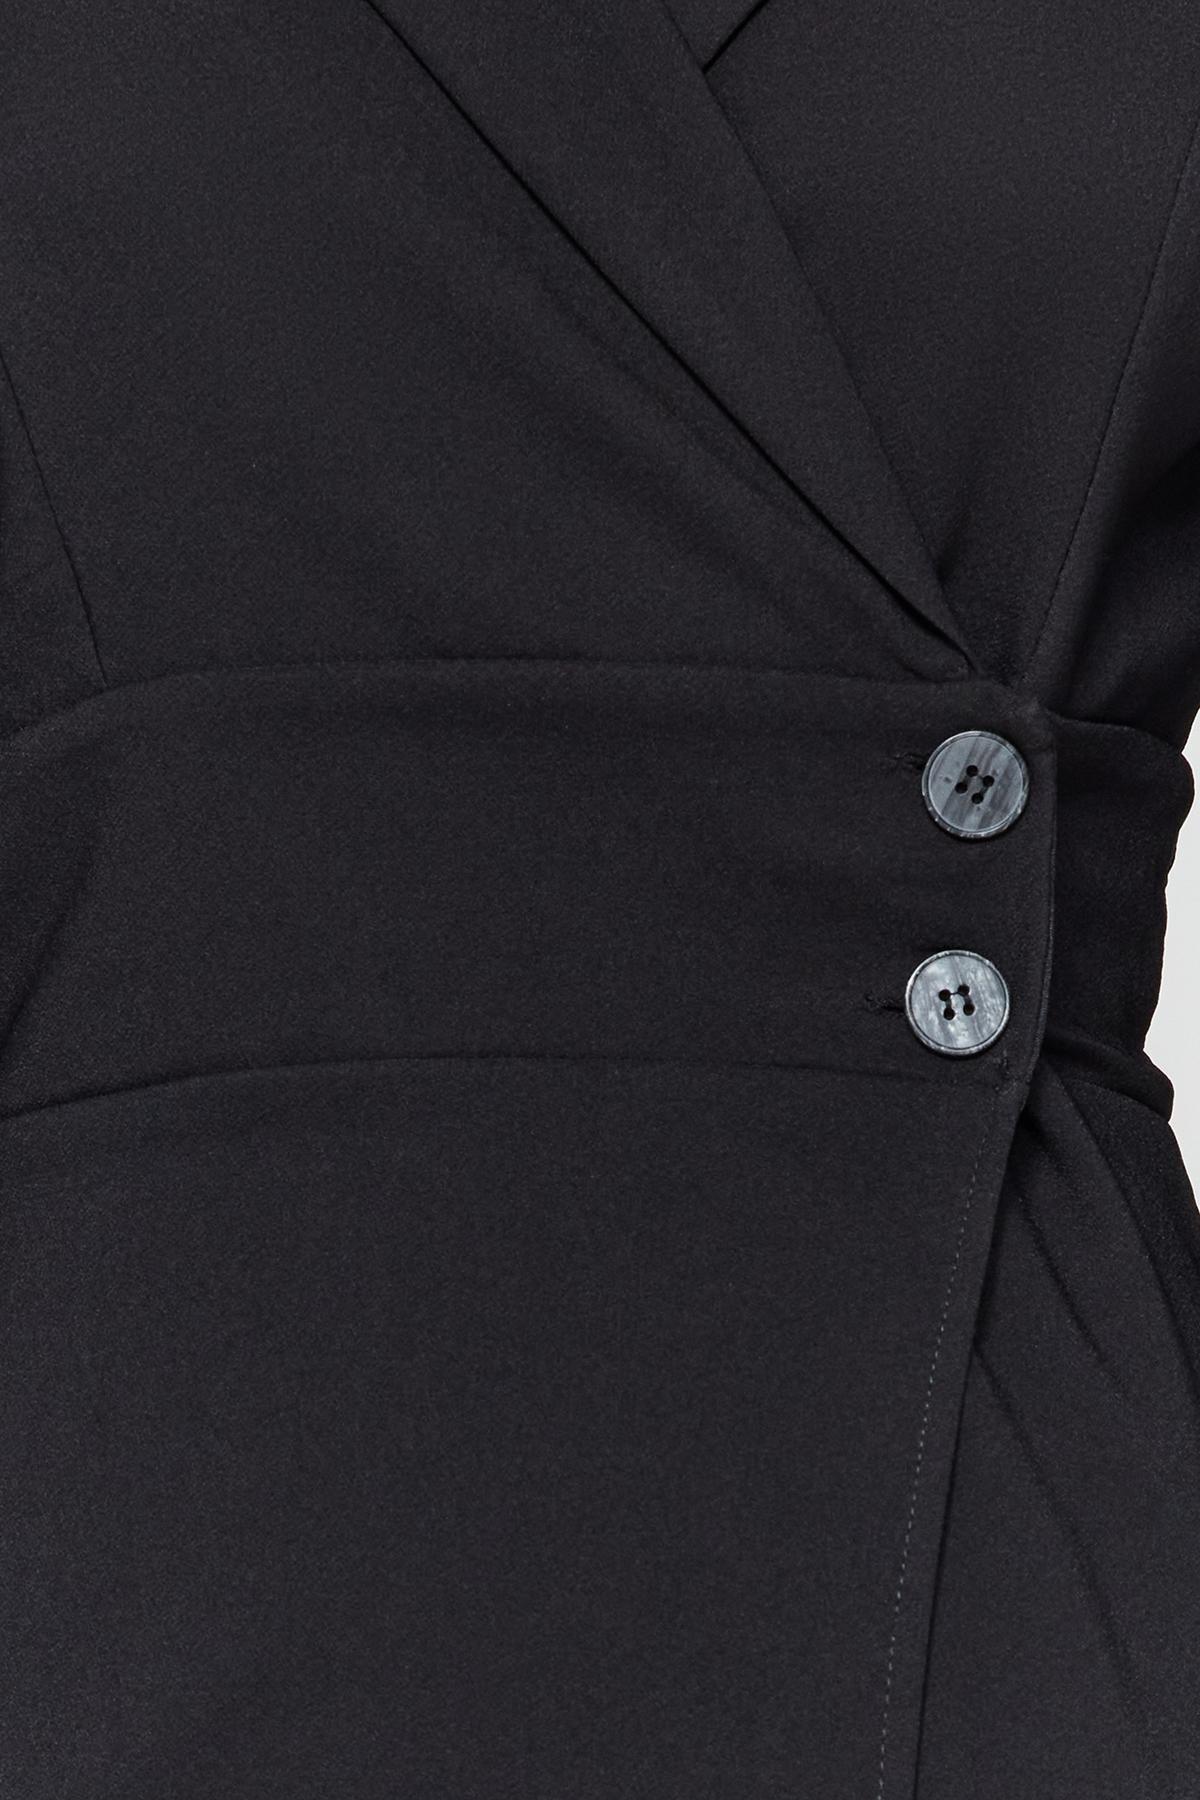 Trendyol - Black Buttoned Knitted Mini Jacket Dress